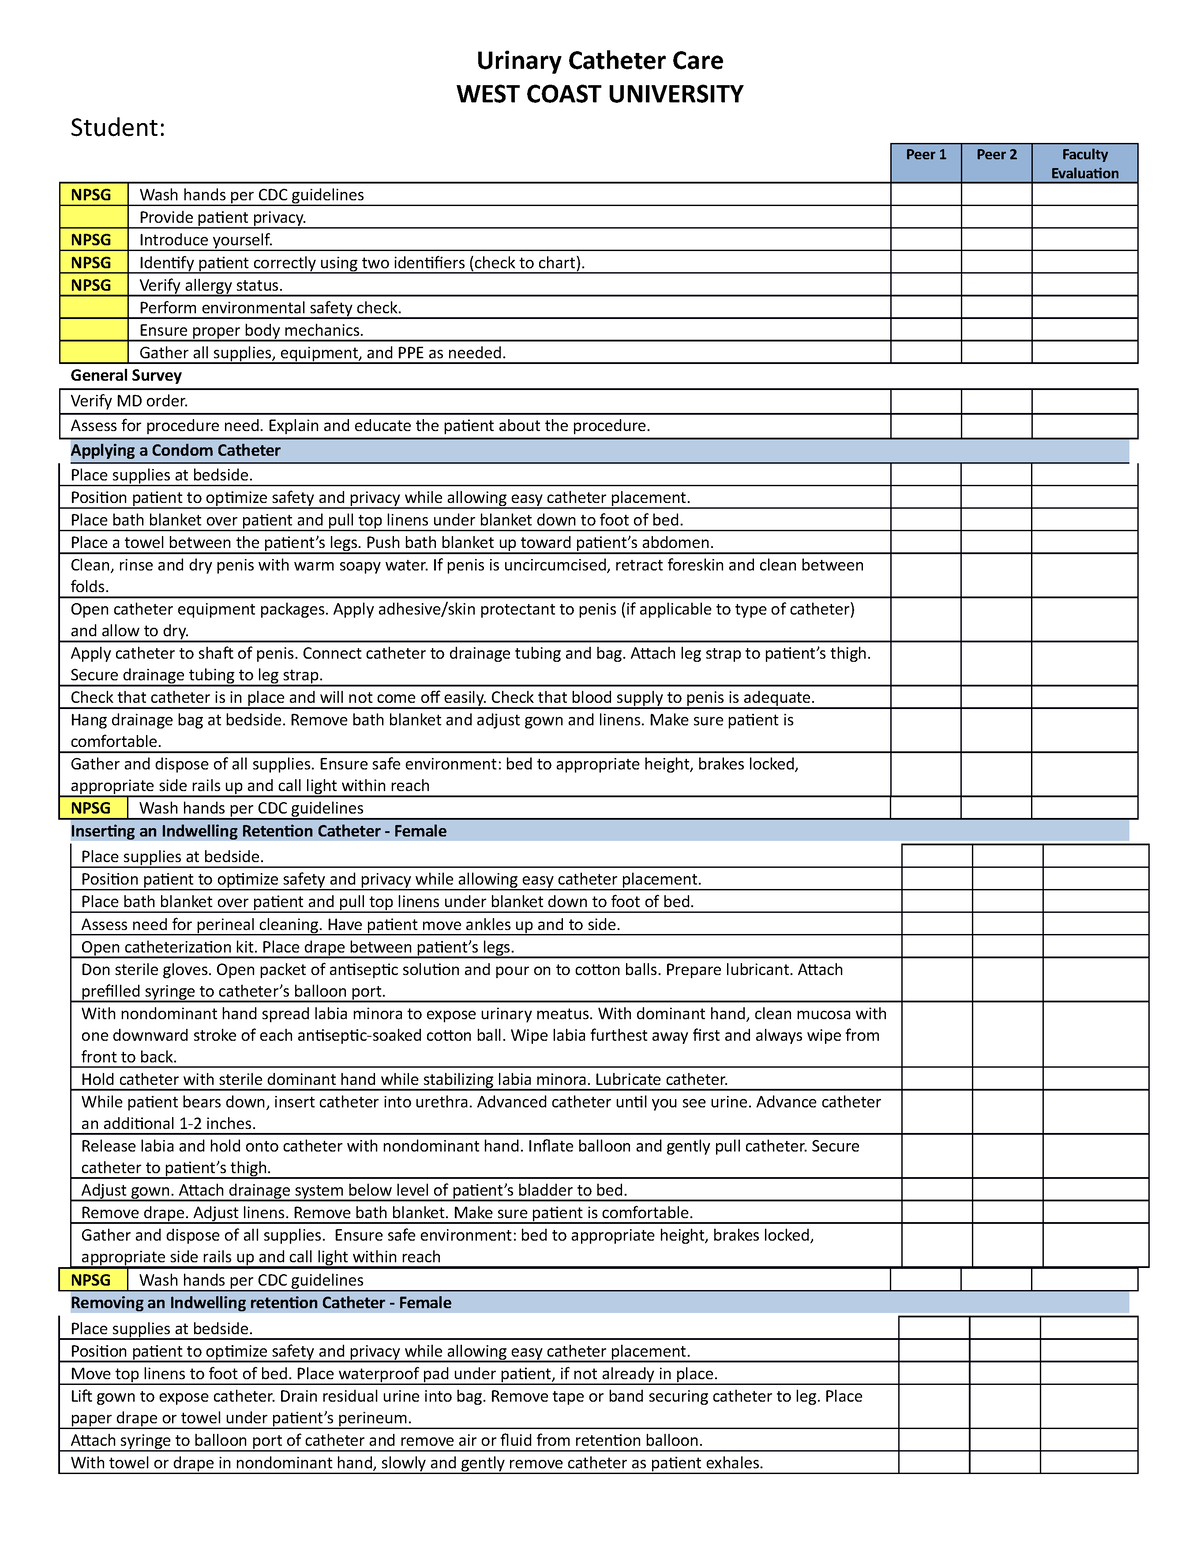 Urinary Catheter Care Checklist 2020 - NURS 120 - WCU - Studocu